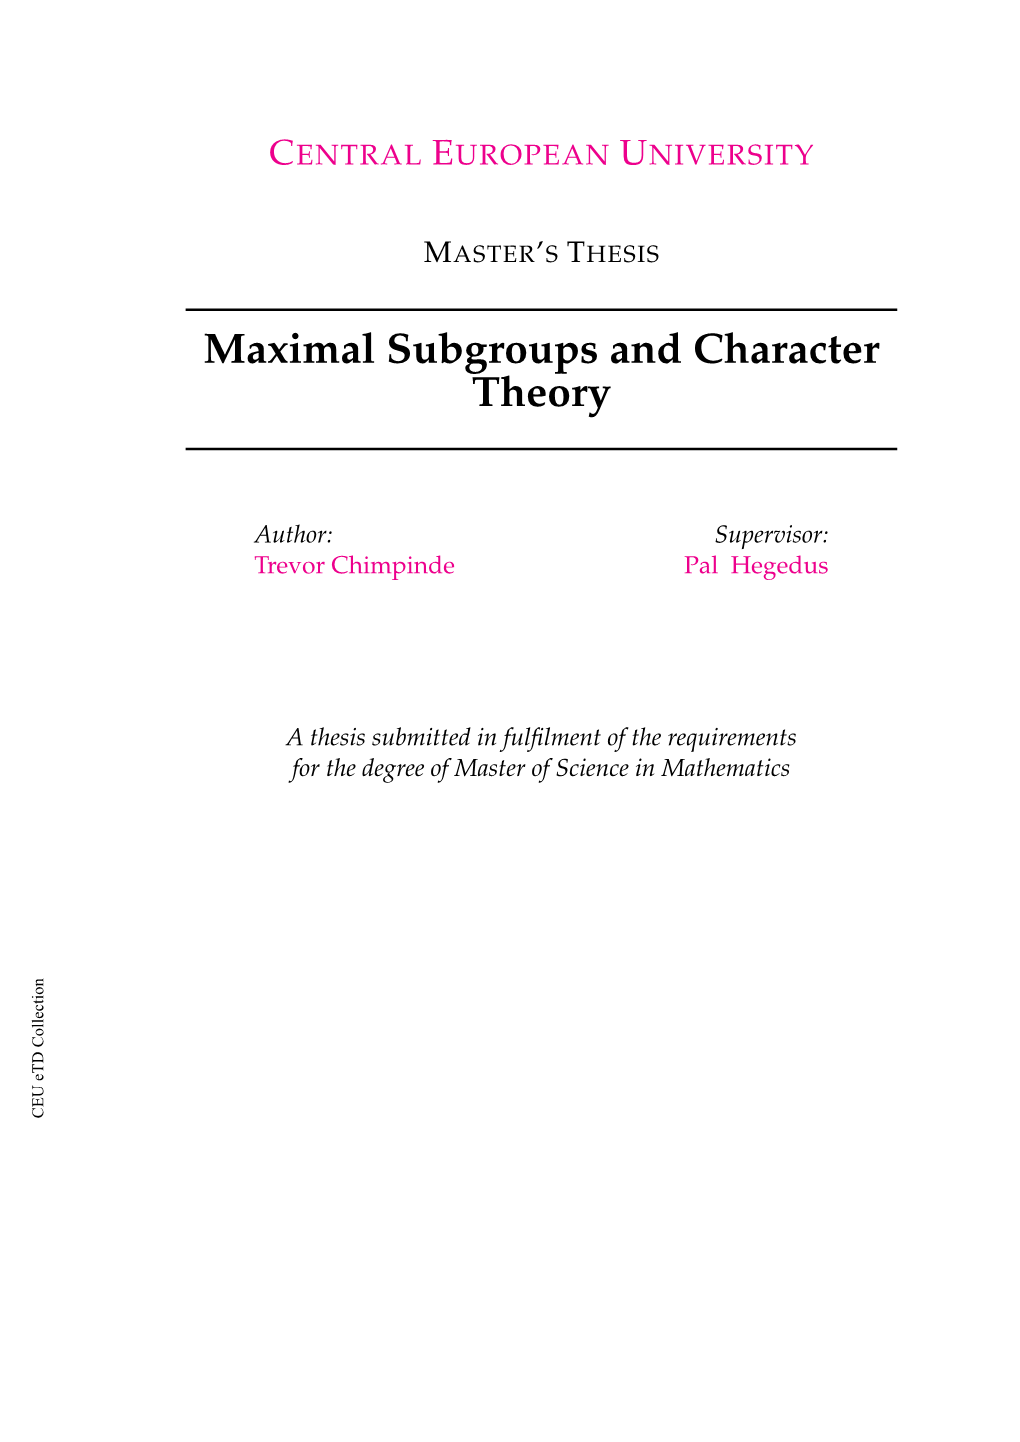 Maximal Subgroups and Character Theory